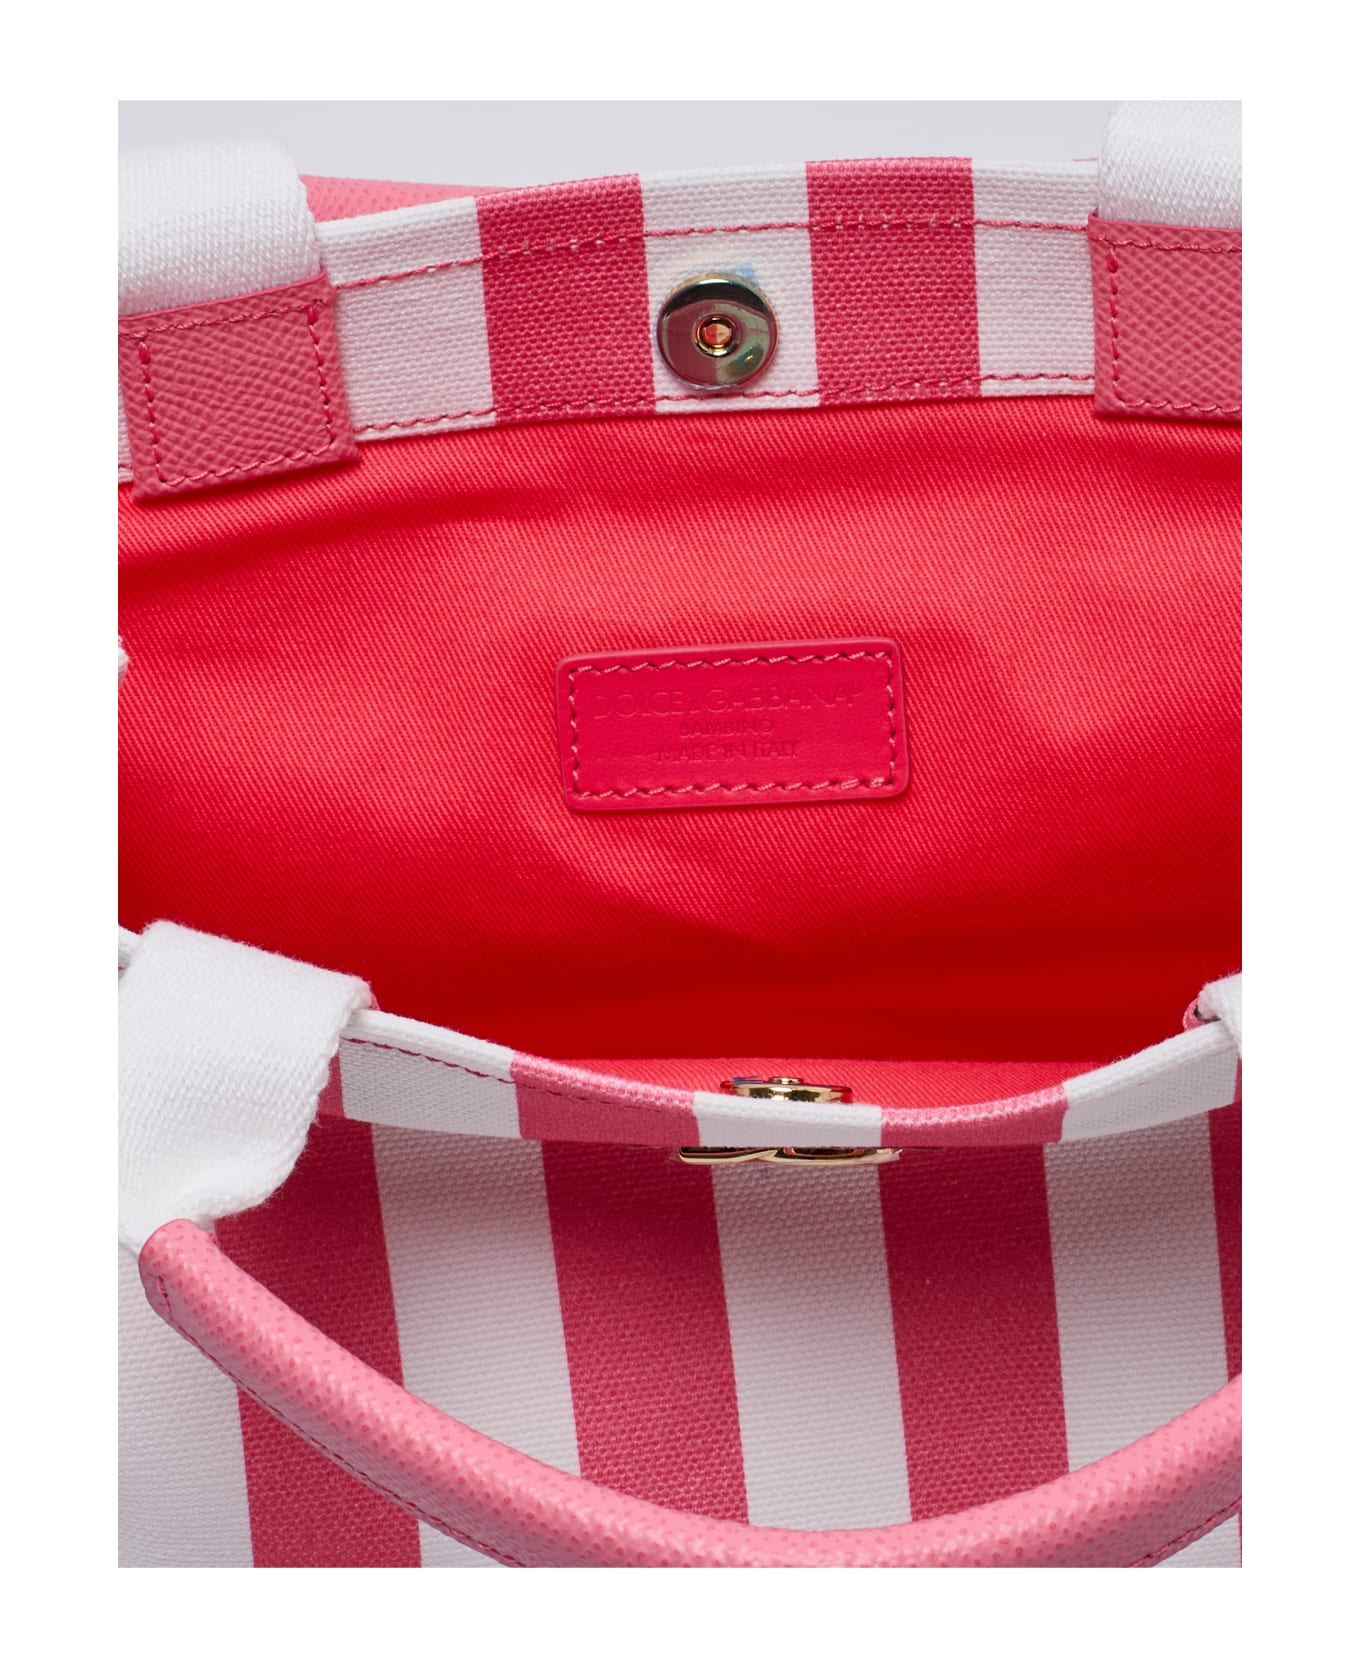 Dolce & Gabbana Handbag Shopping Bag - RIGHE BIANCO-ROSA アクセサリー＆ギフト